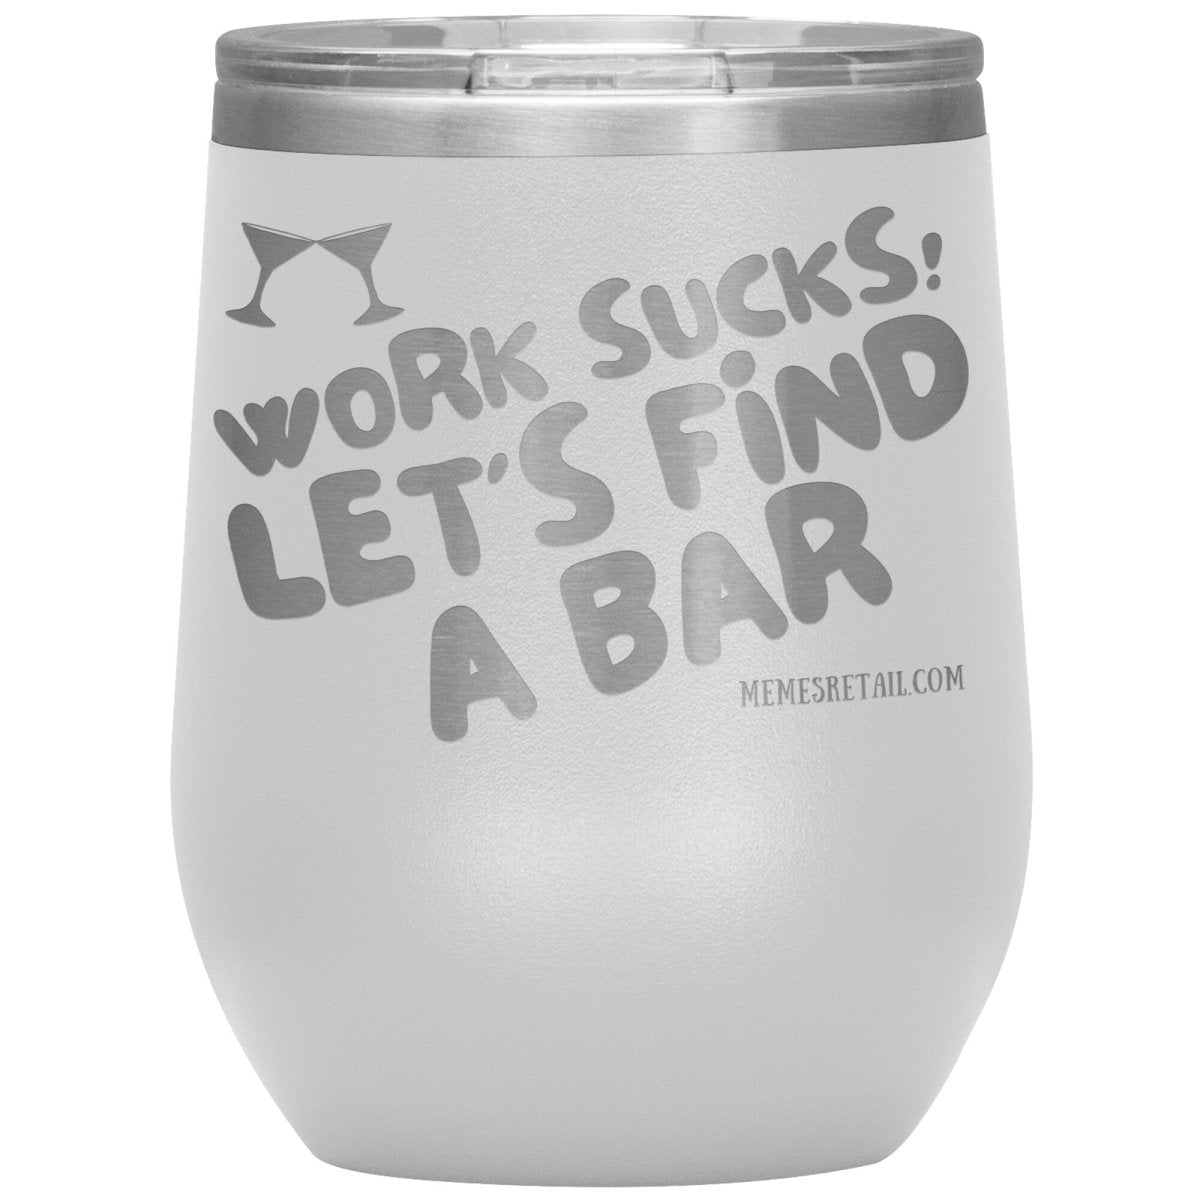 Work Sucks! Let's Find A Bar Tumblers, 12oz Wine Insulated Tumbler / White - MemesRetail.com